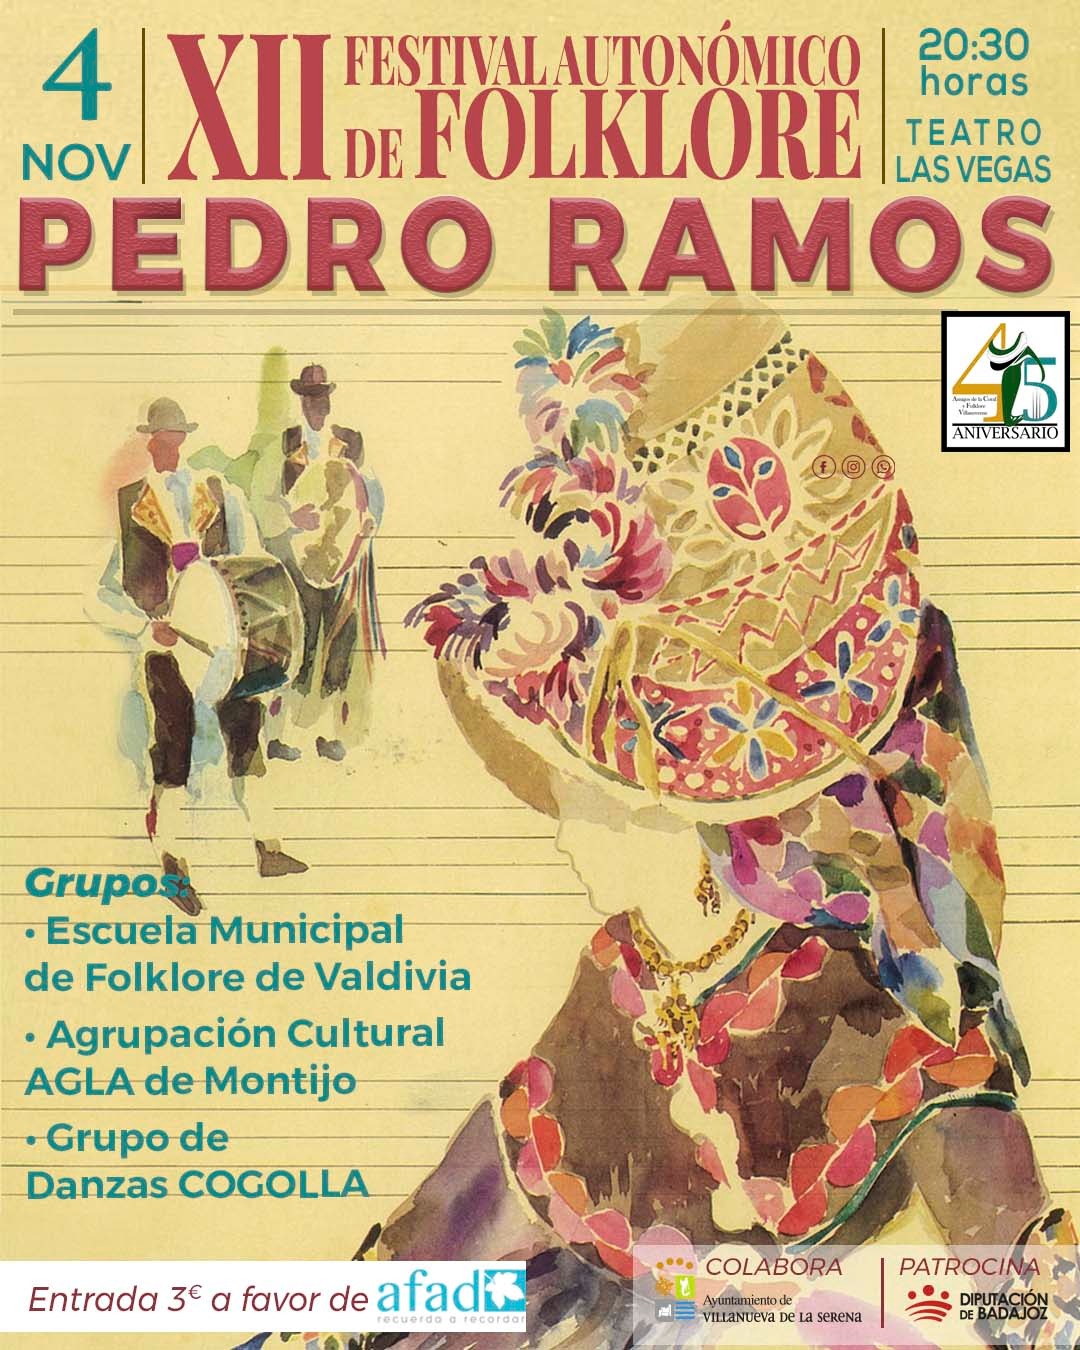 XII Festival Autonómico de Folklore Pedro Ramos